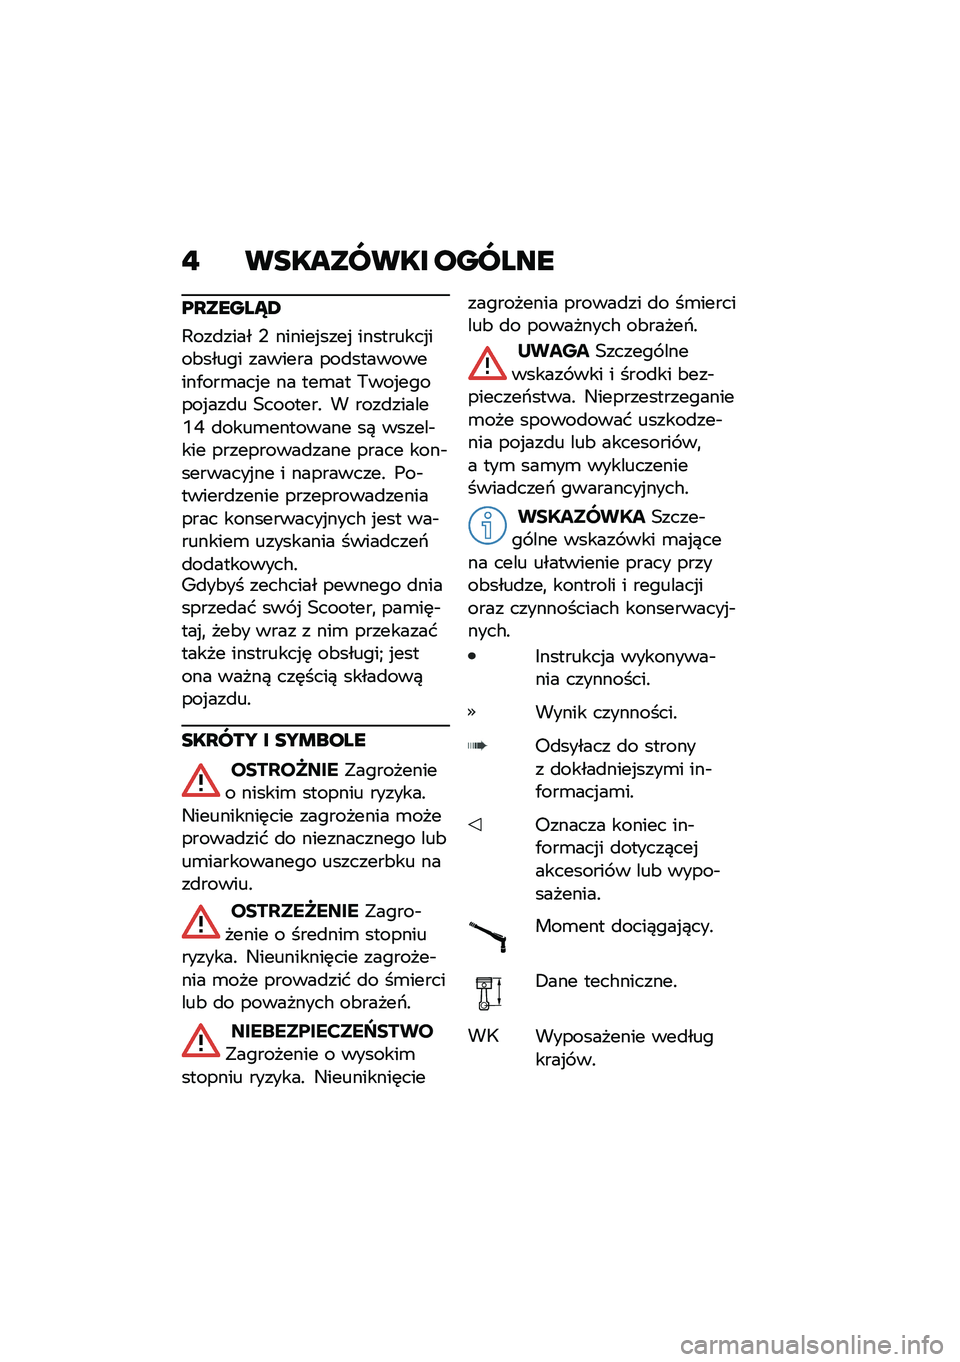 BMW MOTORRAD C 400 GT 2020  Instrukcja obsługi (in Polish) �" ��������� ������
��Q�����X�4
�,���
���� �- ������%����% ���������%���&����� ������� ���
����������/���\b���%� �� ���\b��